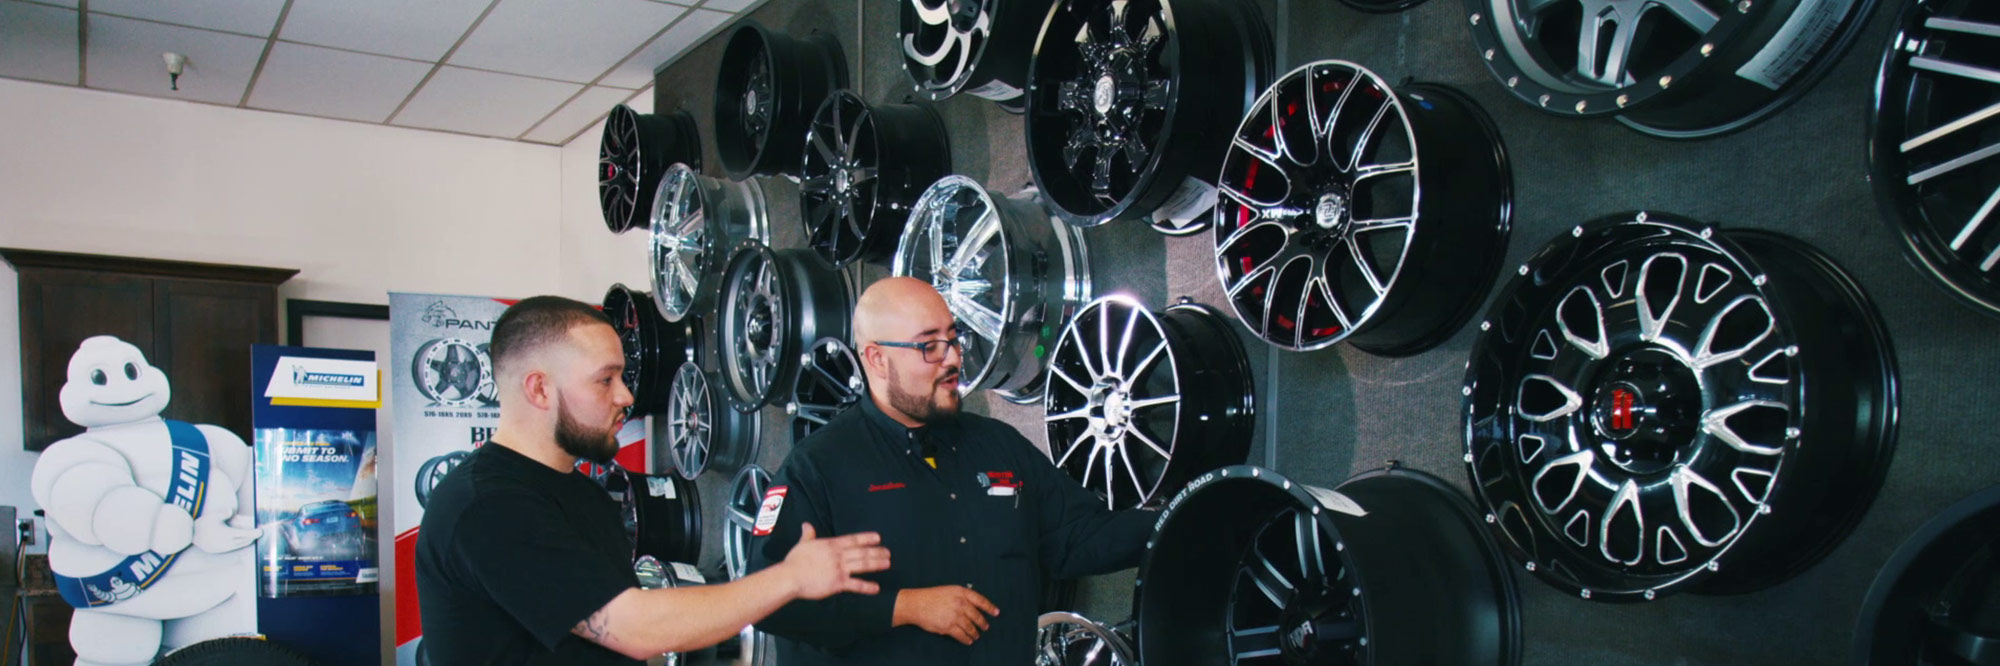 2 personnel choosing tire plates